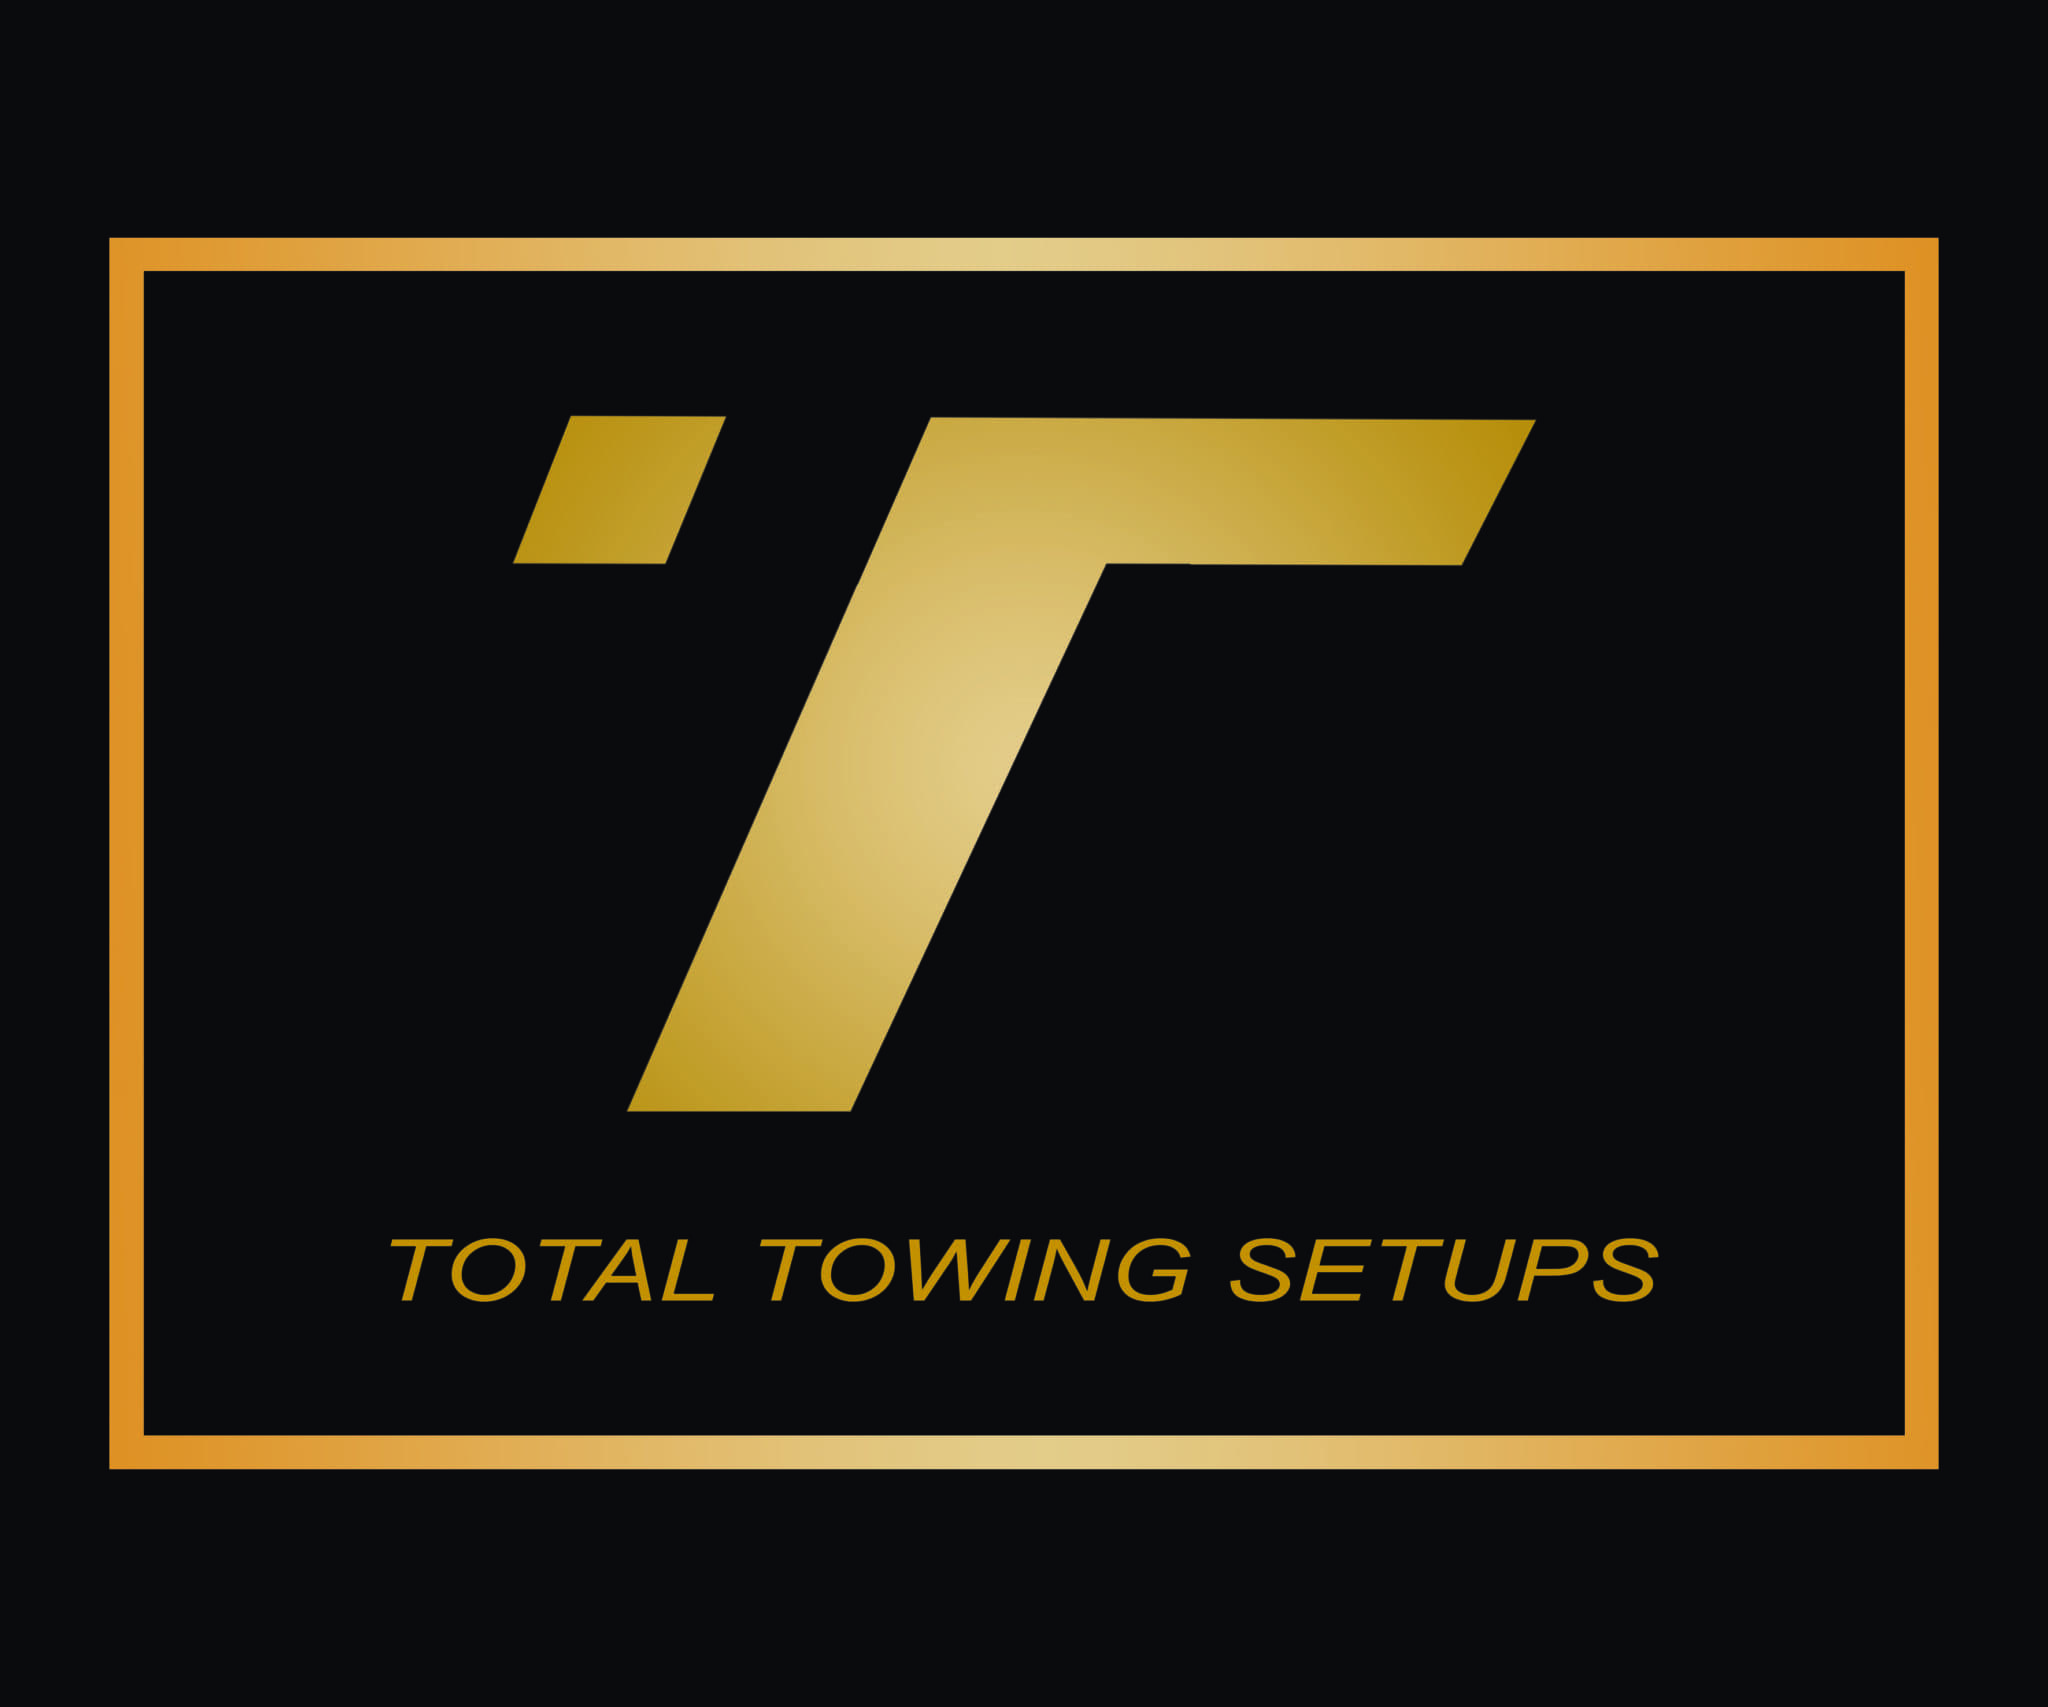 Total Towing Setups